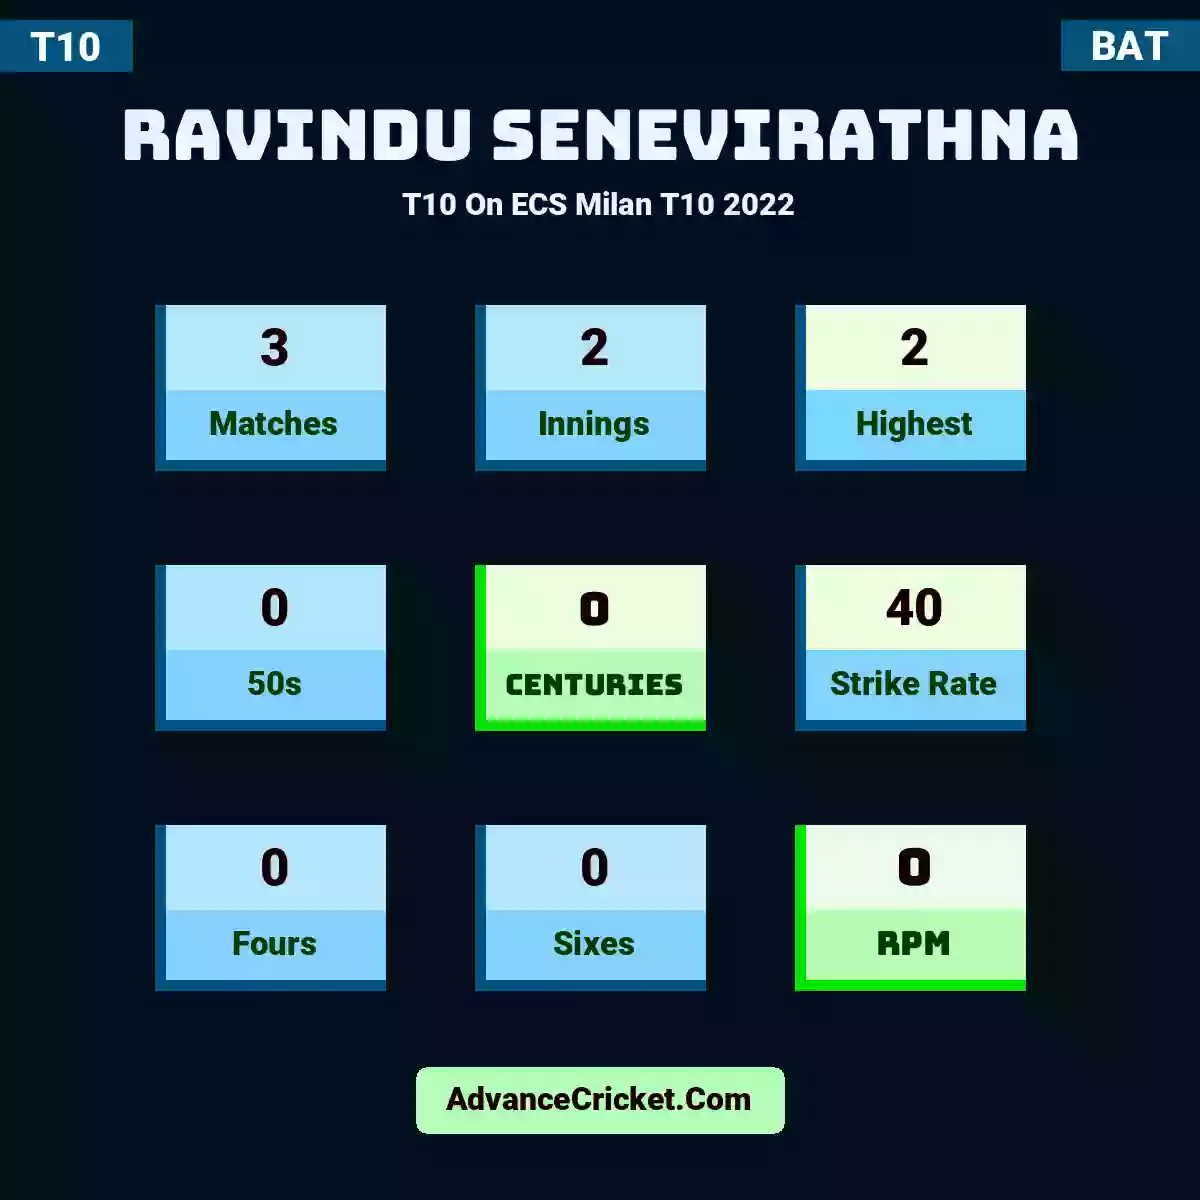 Ravindu Senevirathna T10  On ECS Milan T10 2022, Ravindu Senevirathna played 3 matches, scored 2 runs as highest, 0 half-centuries, and 0 centuries, with a strike rate of 40. R.Senevirathna hit 0 fours and 0 sixes, with an RPM of 0.